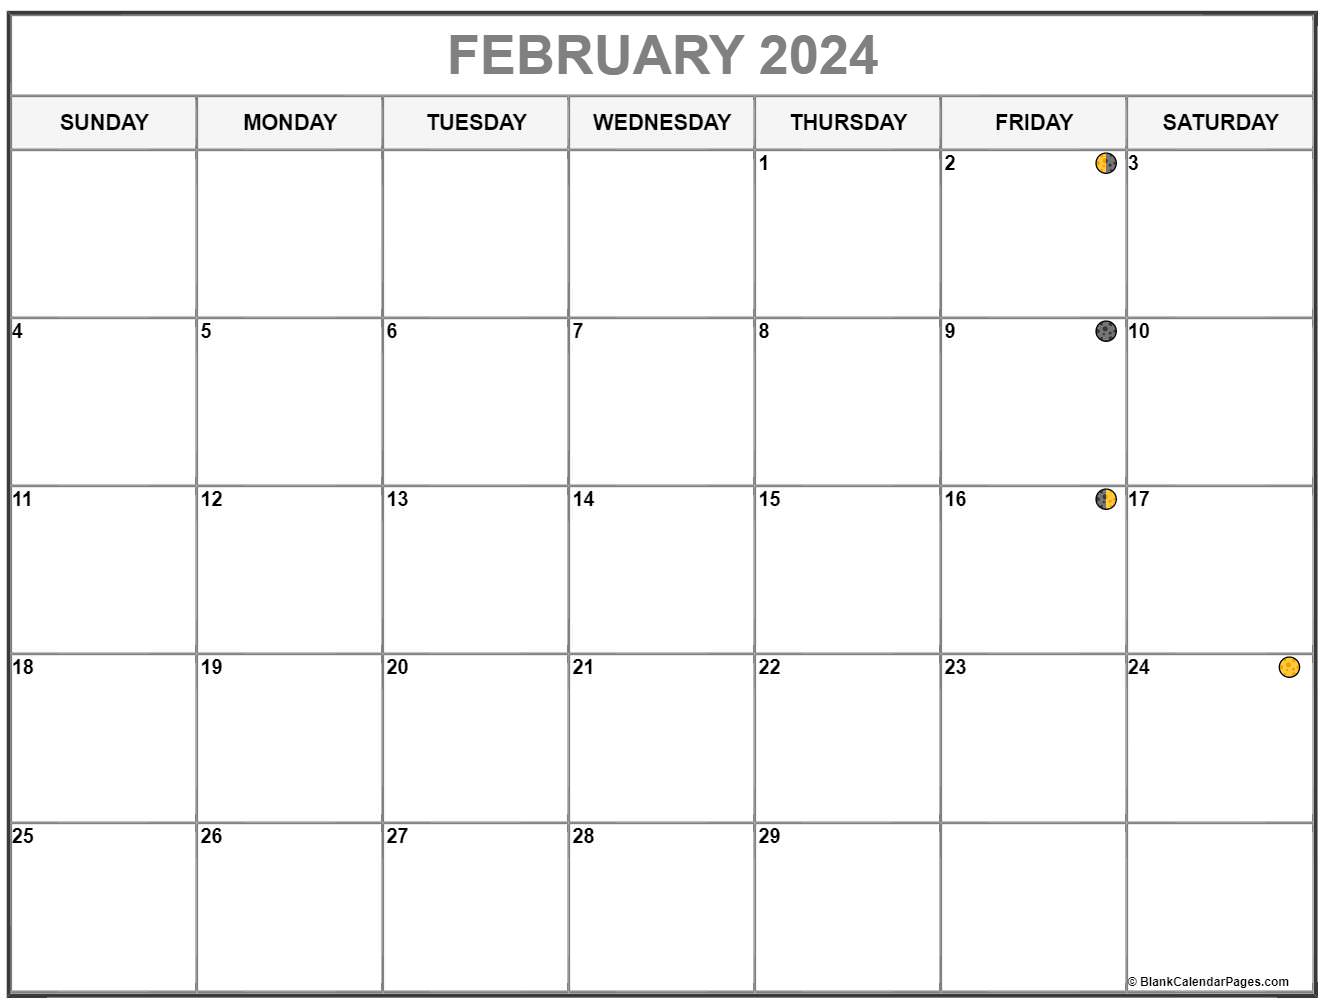 Lunar Calendar February 2022 February 2022 Lunar Calendar | Moon Phase Calendar